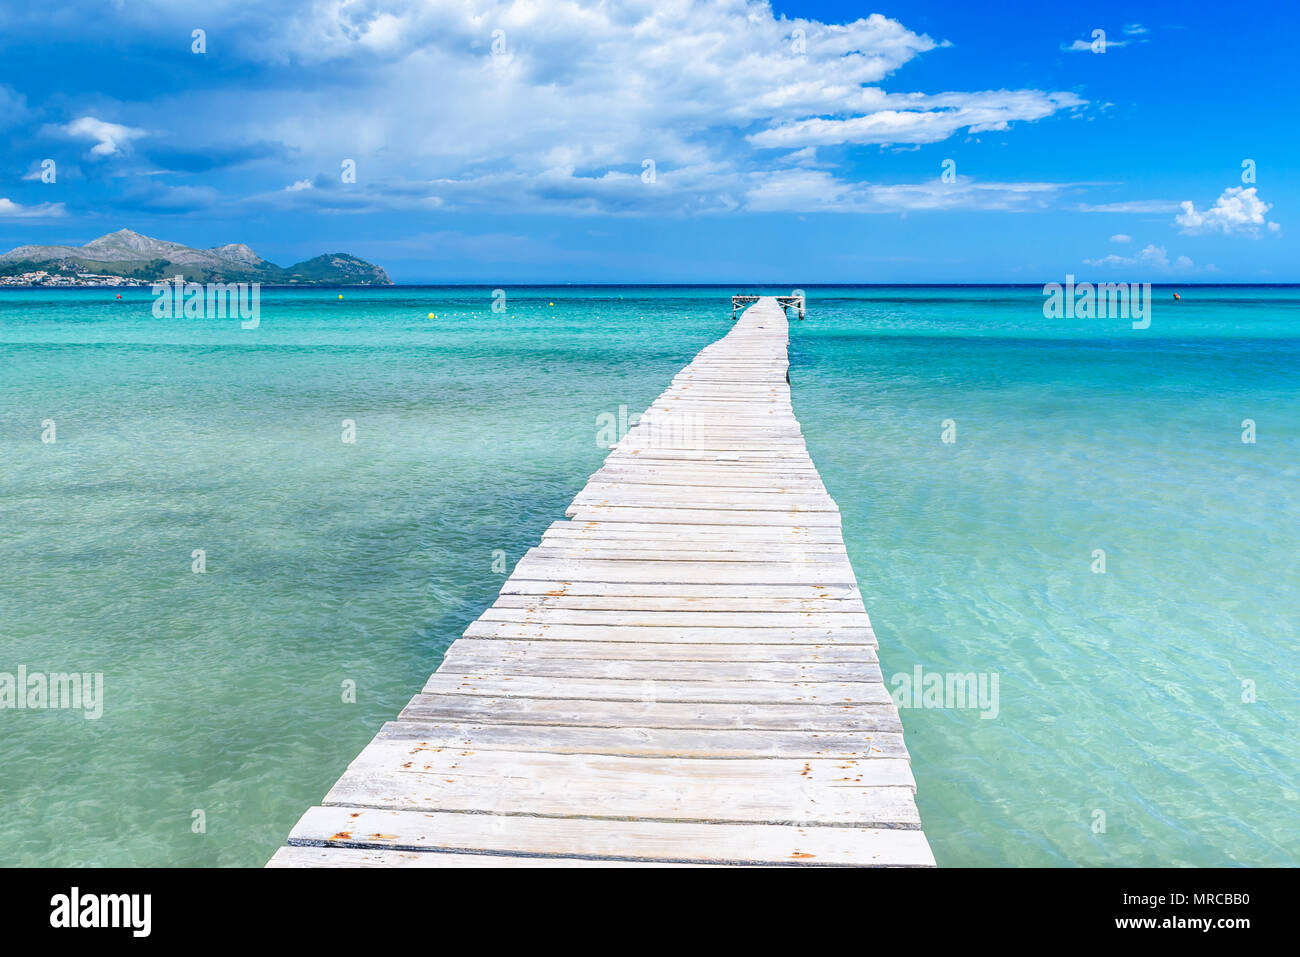 Dal Molo presso Playa Muro - maiorca isole baleari Spagna Foto stock - Alamy